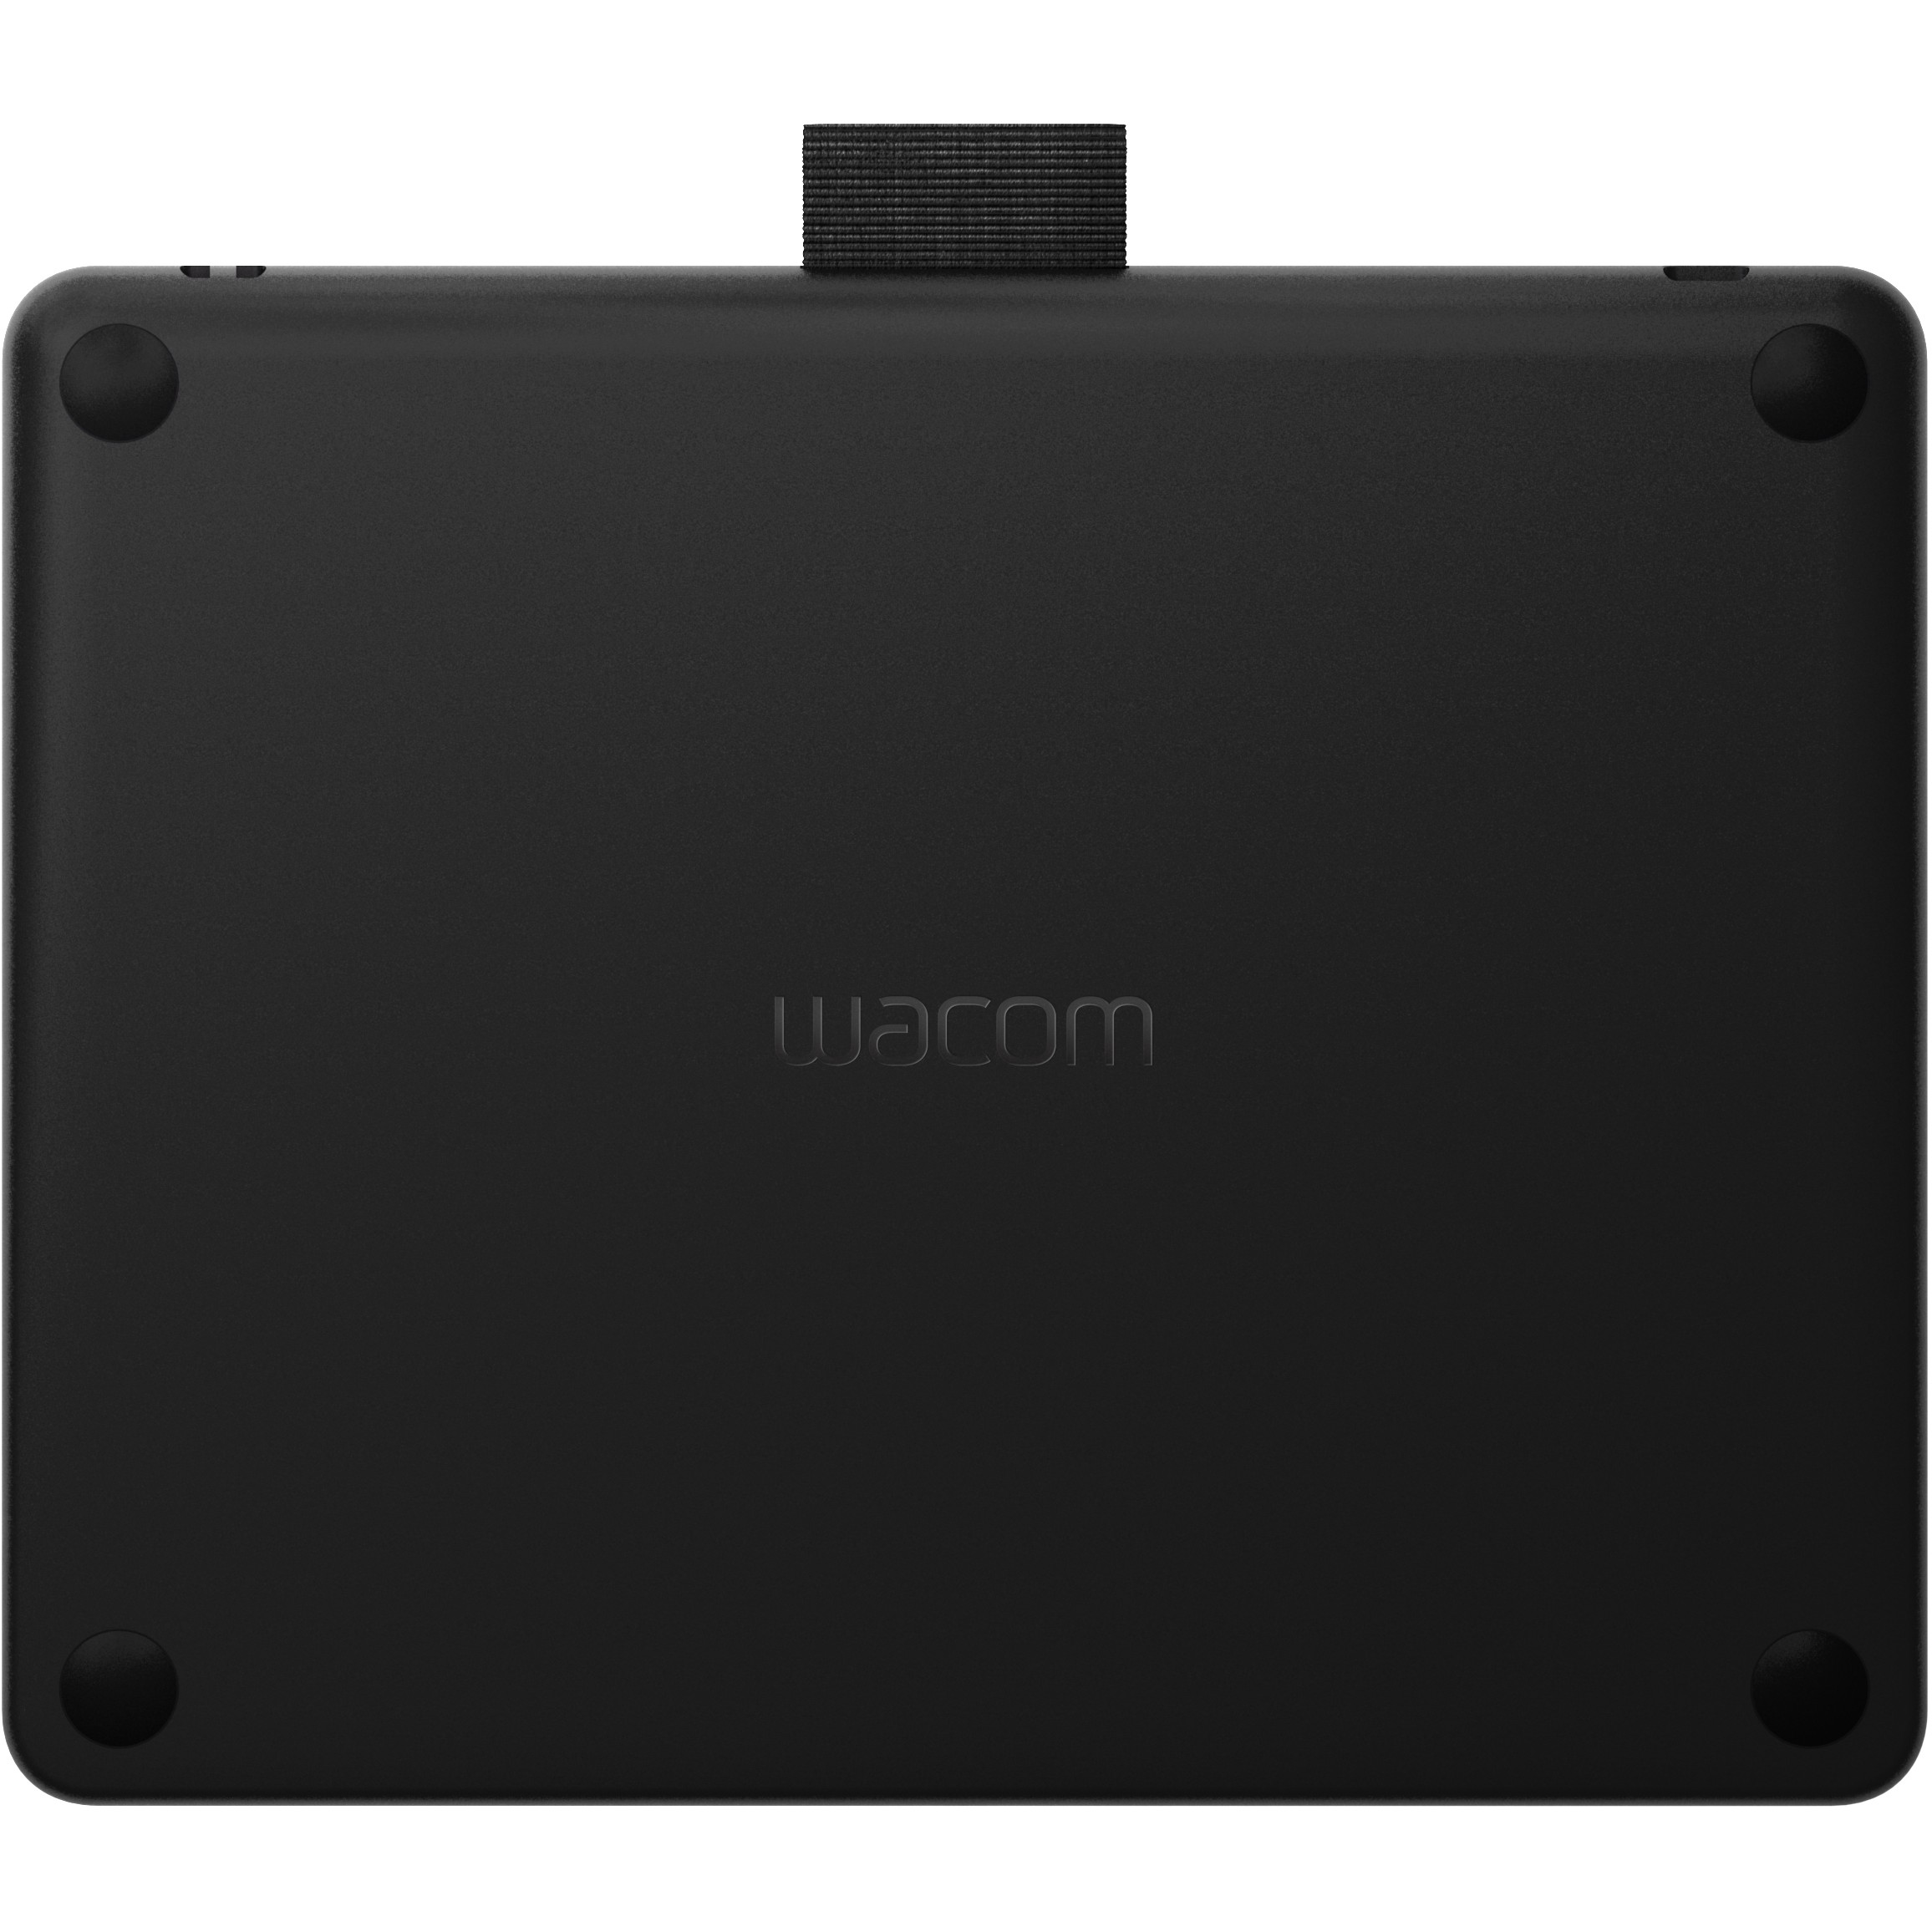 Wacom Intuos S Grafiktablett Schwarz 2540 lpi 152 x 95 mm USB